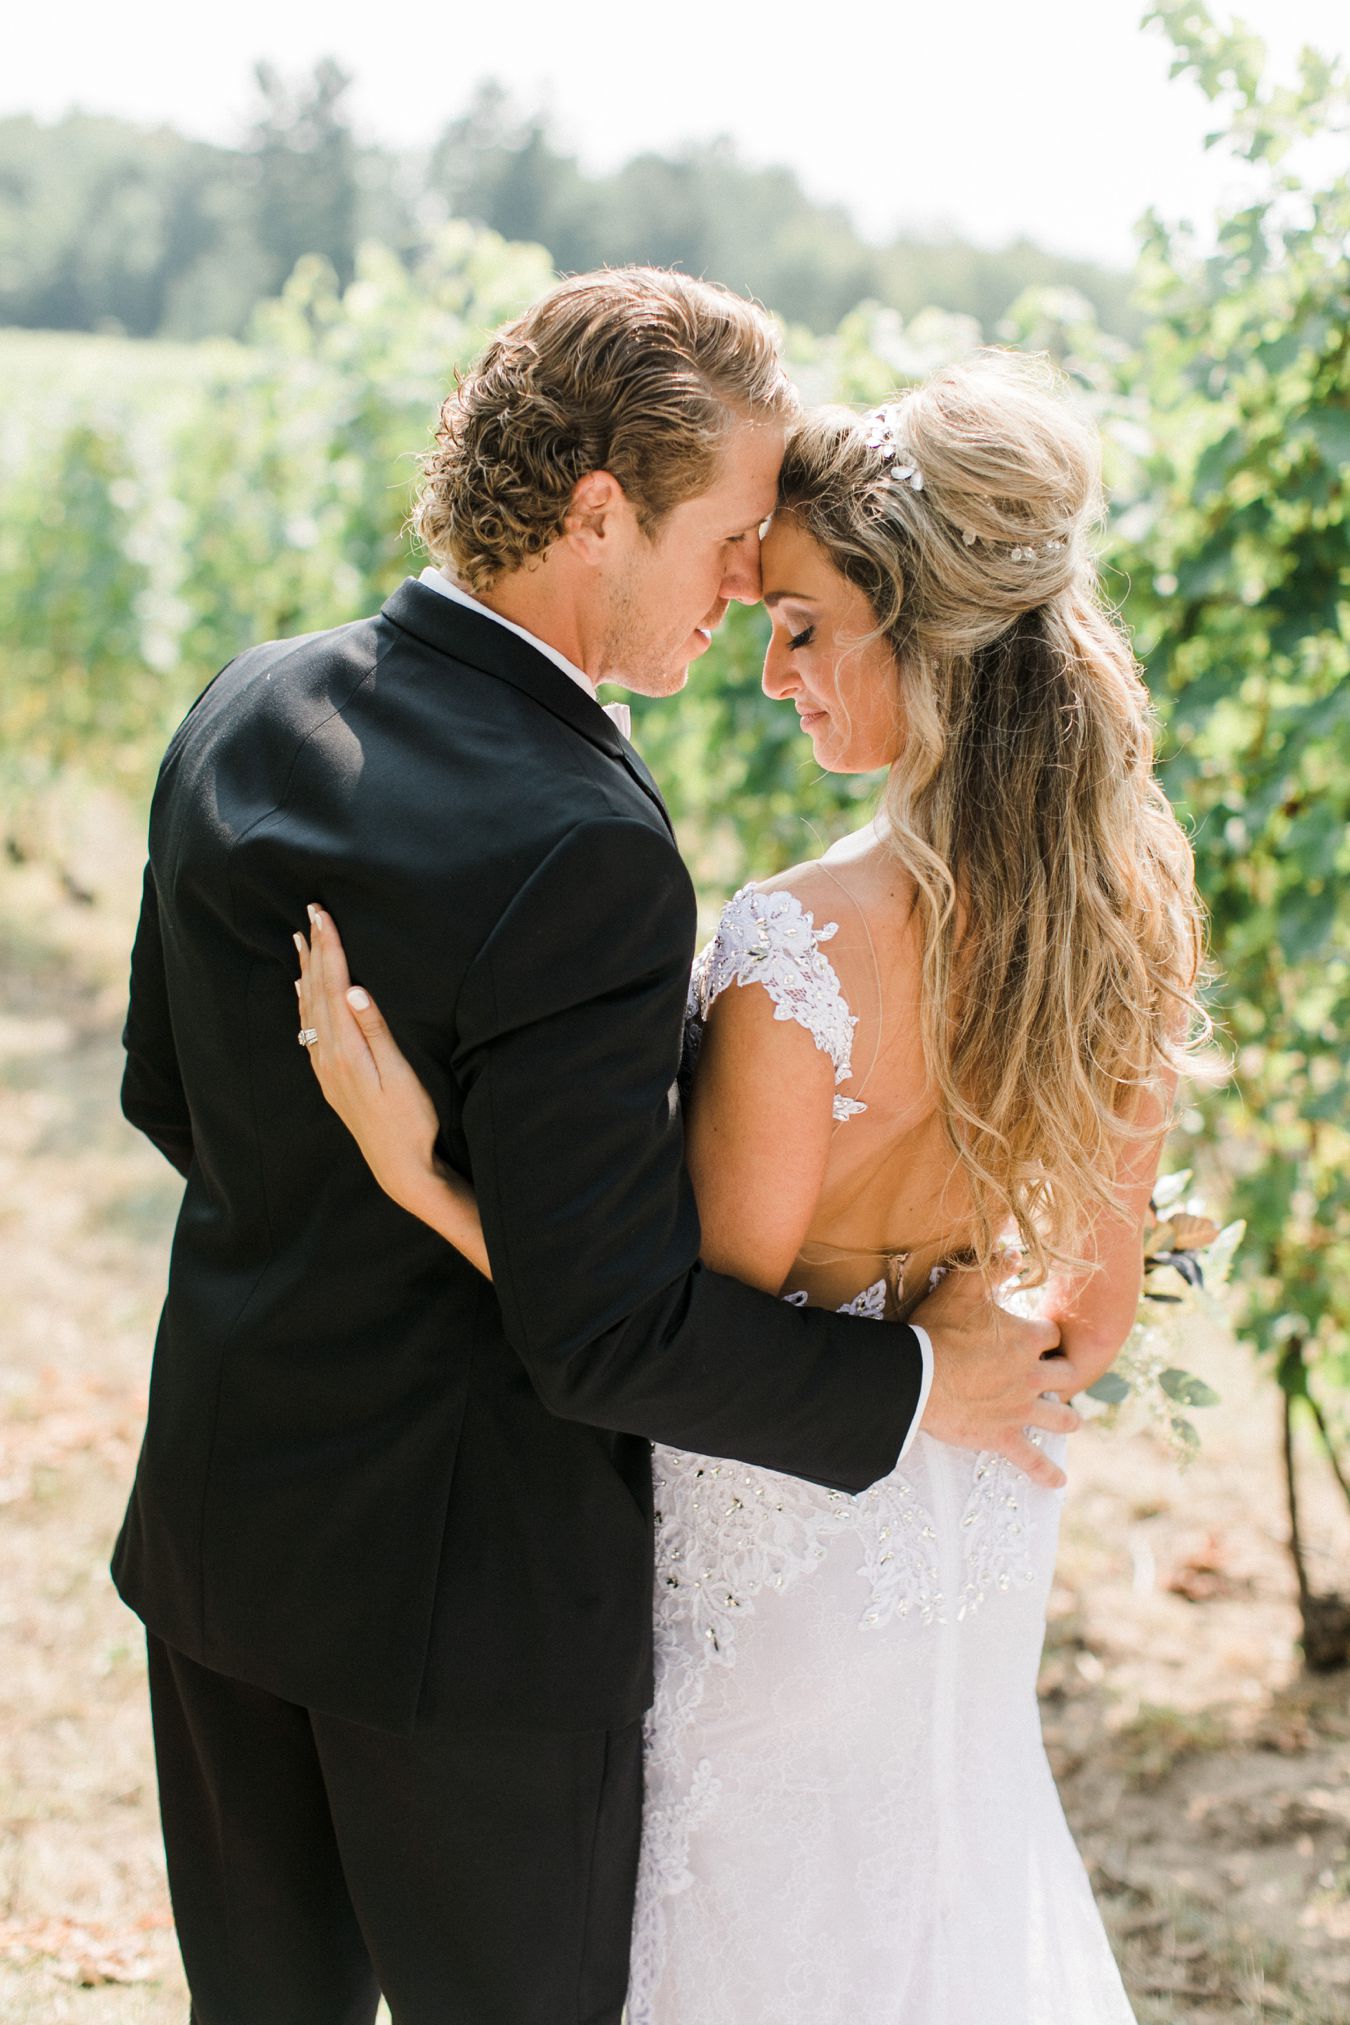 Michigan Vineyard Wedding Photographer | Cory Weber Photography 